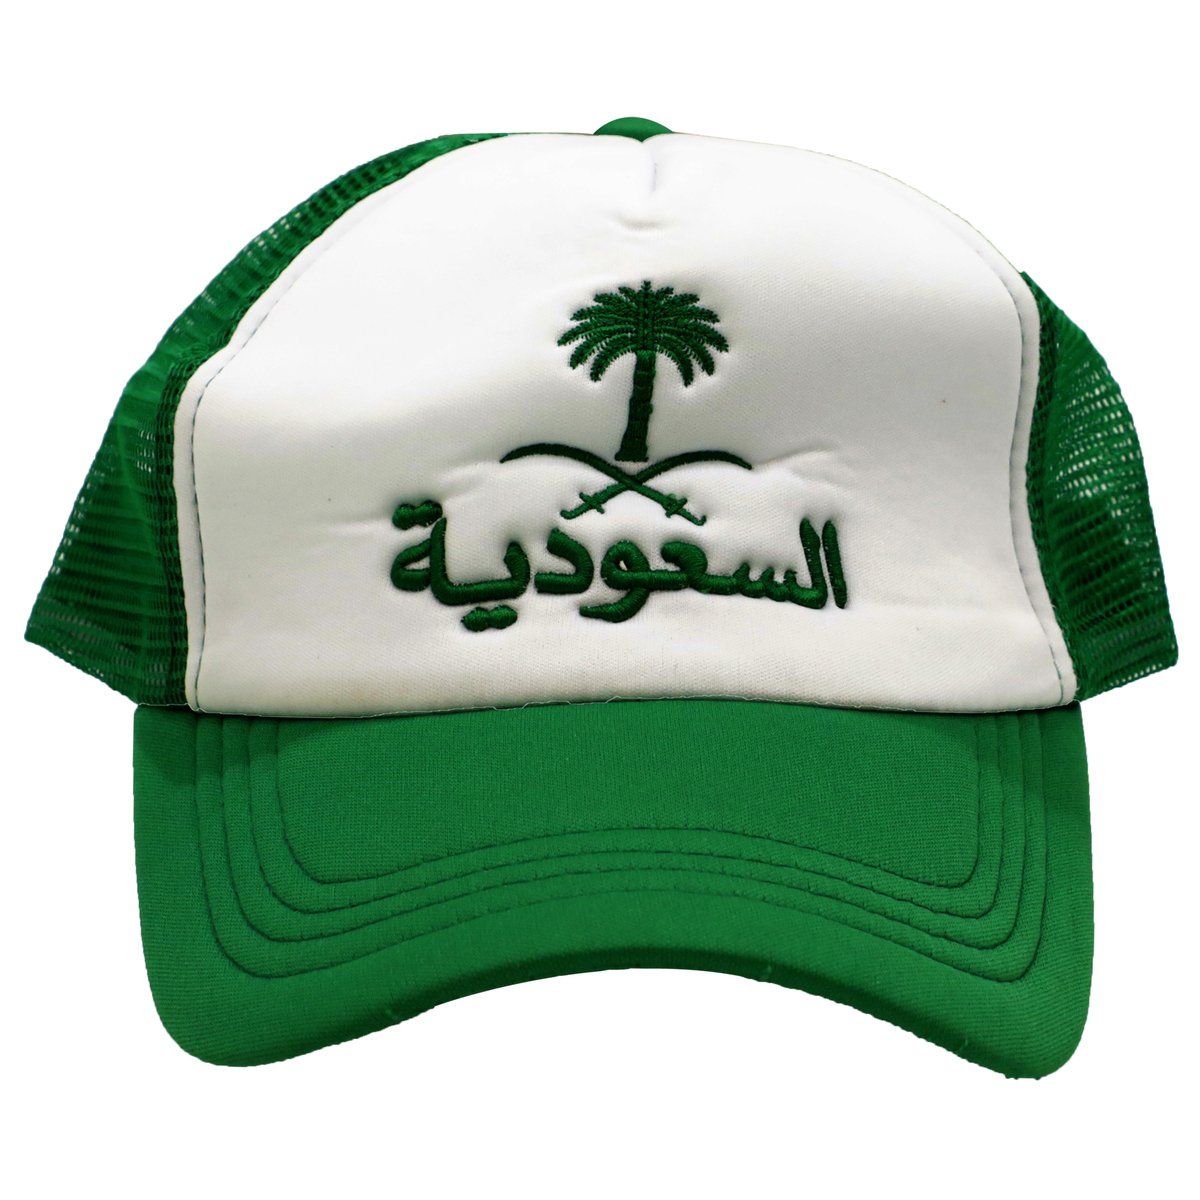 Saudi Arabia Base Ball Hat